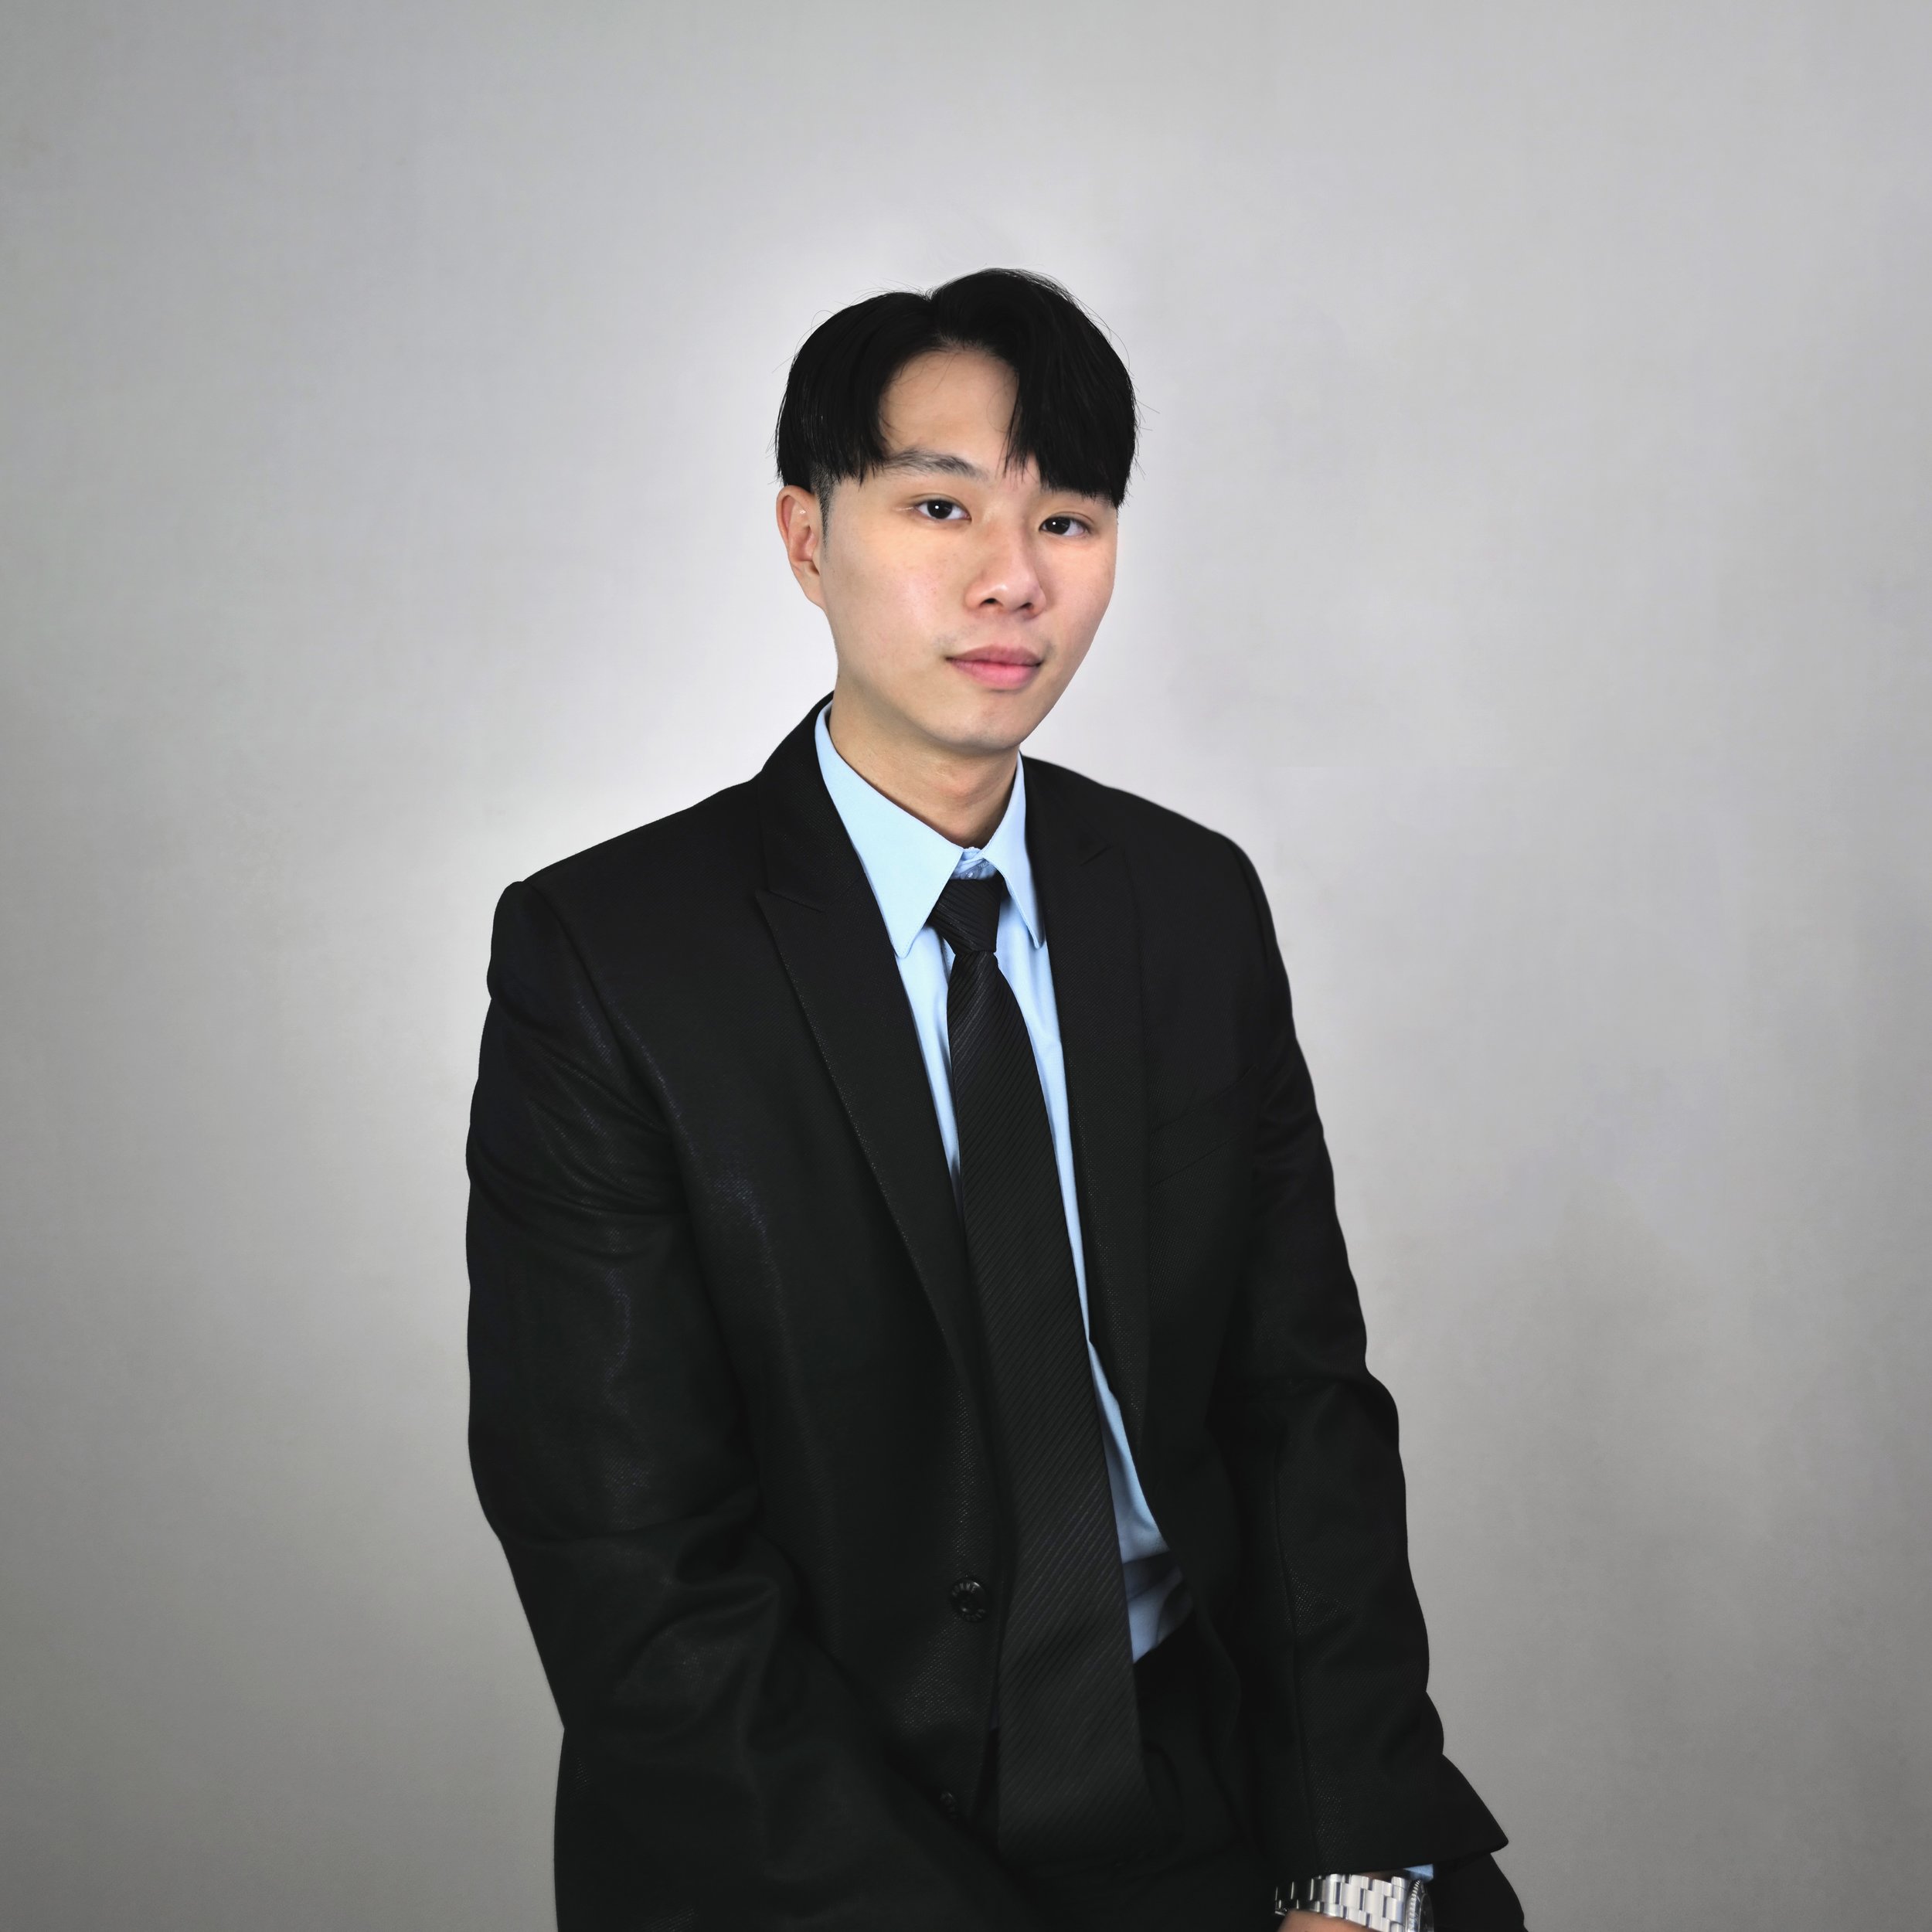 Roy Wang / Business Development Manager